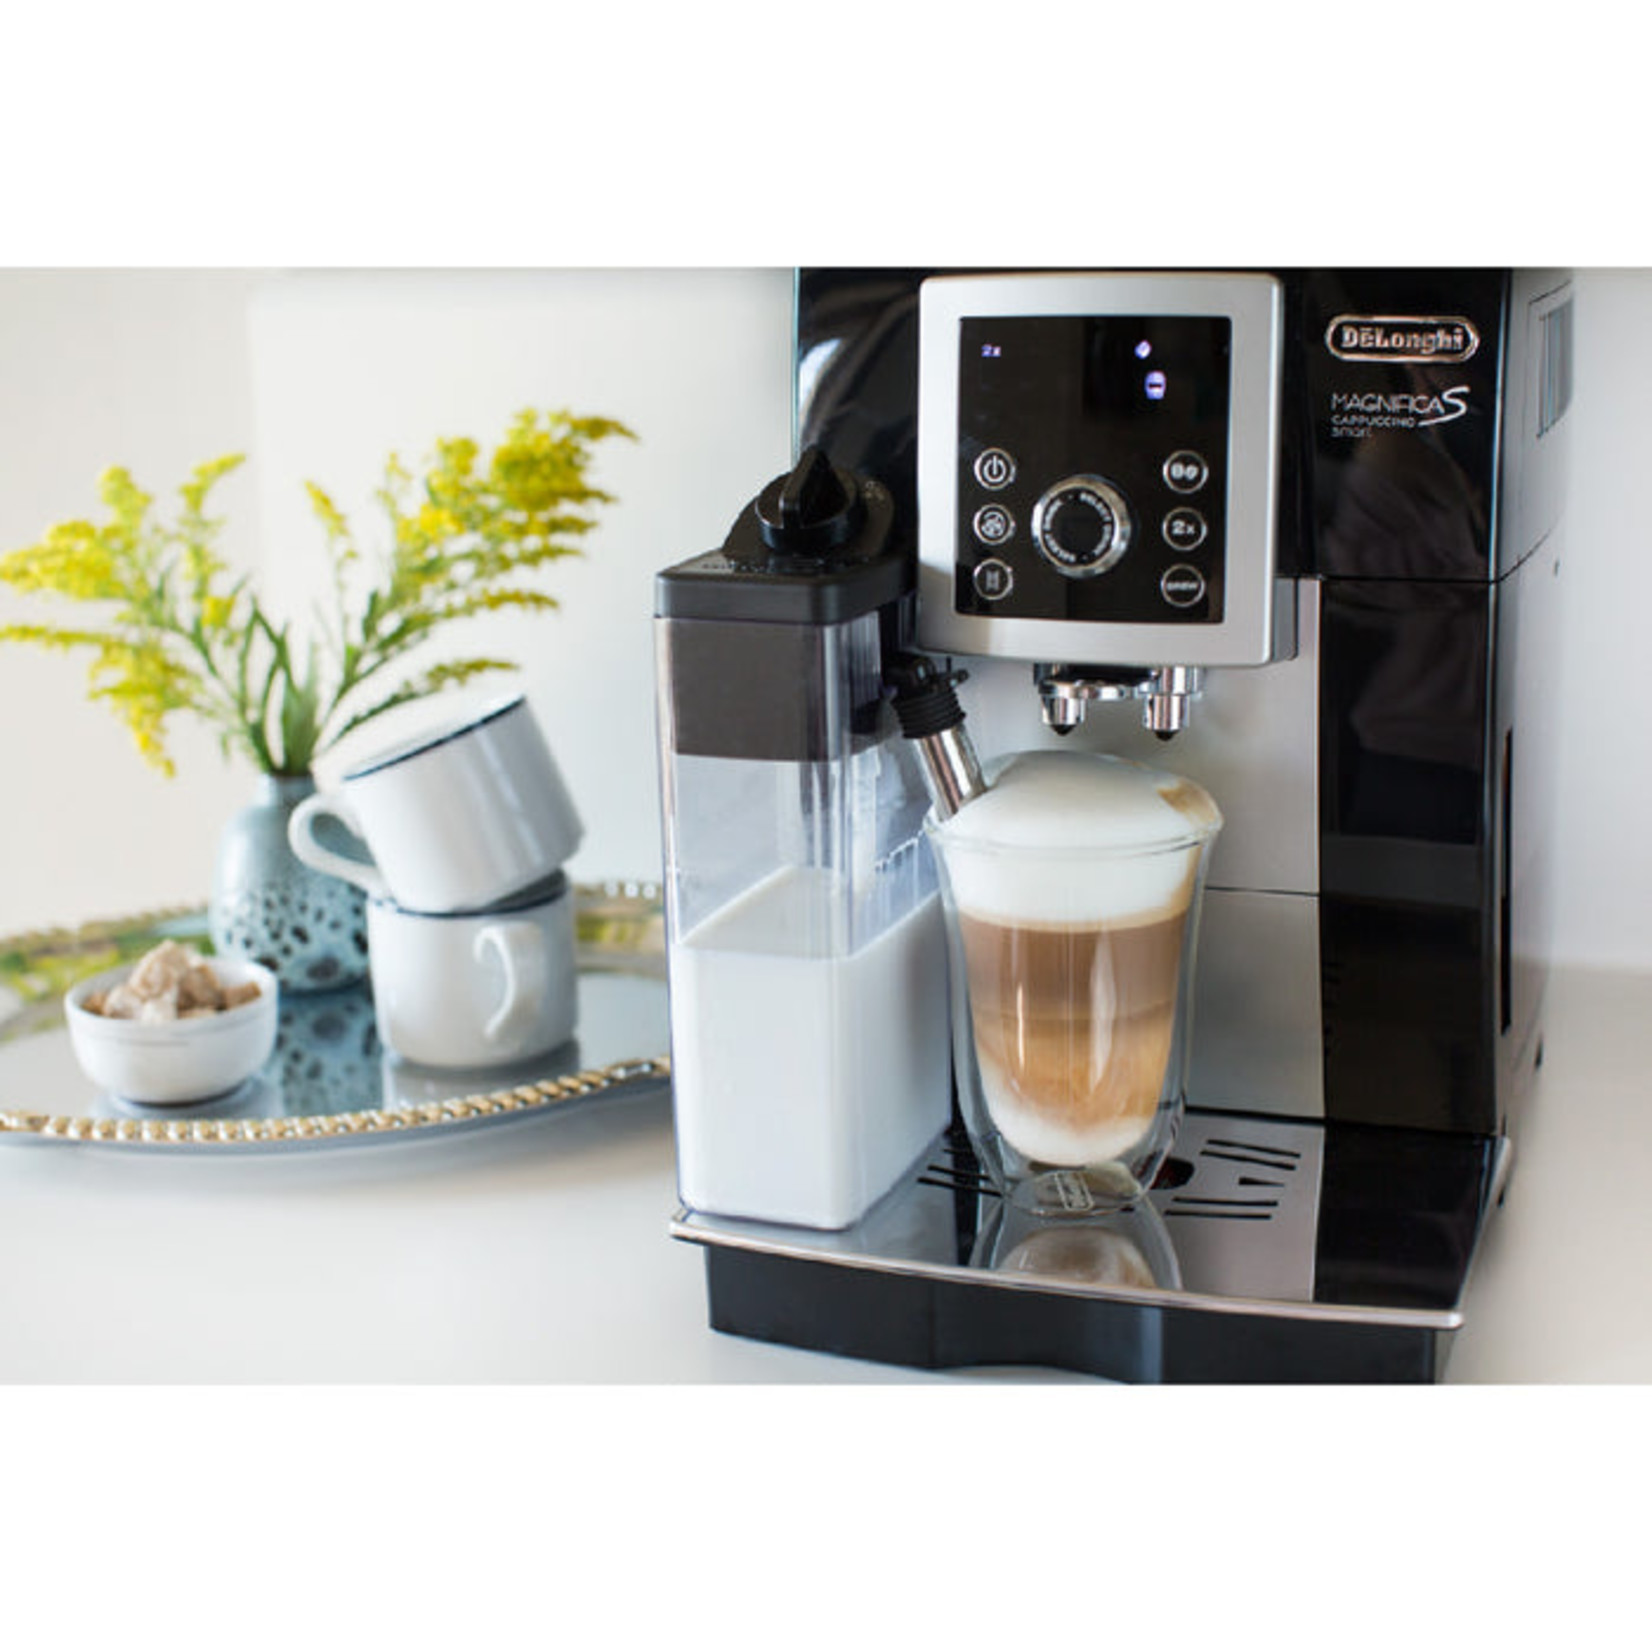 DELONGHI Espresso automatique Magnifica Smart Cappuccino (Démonstrateur)